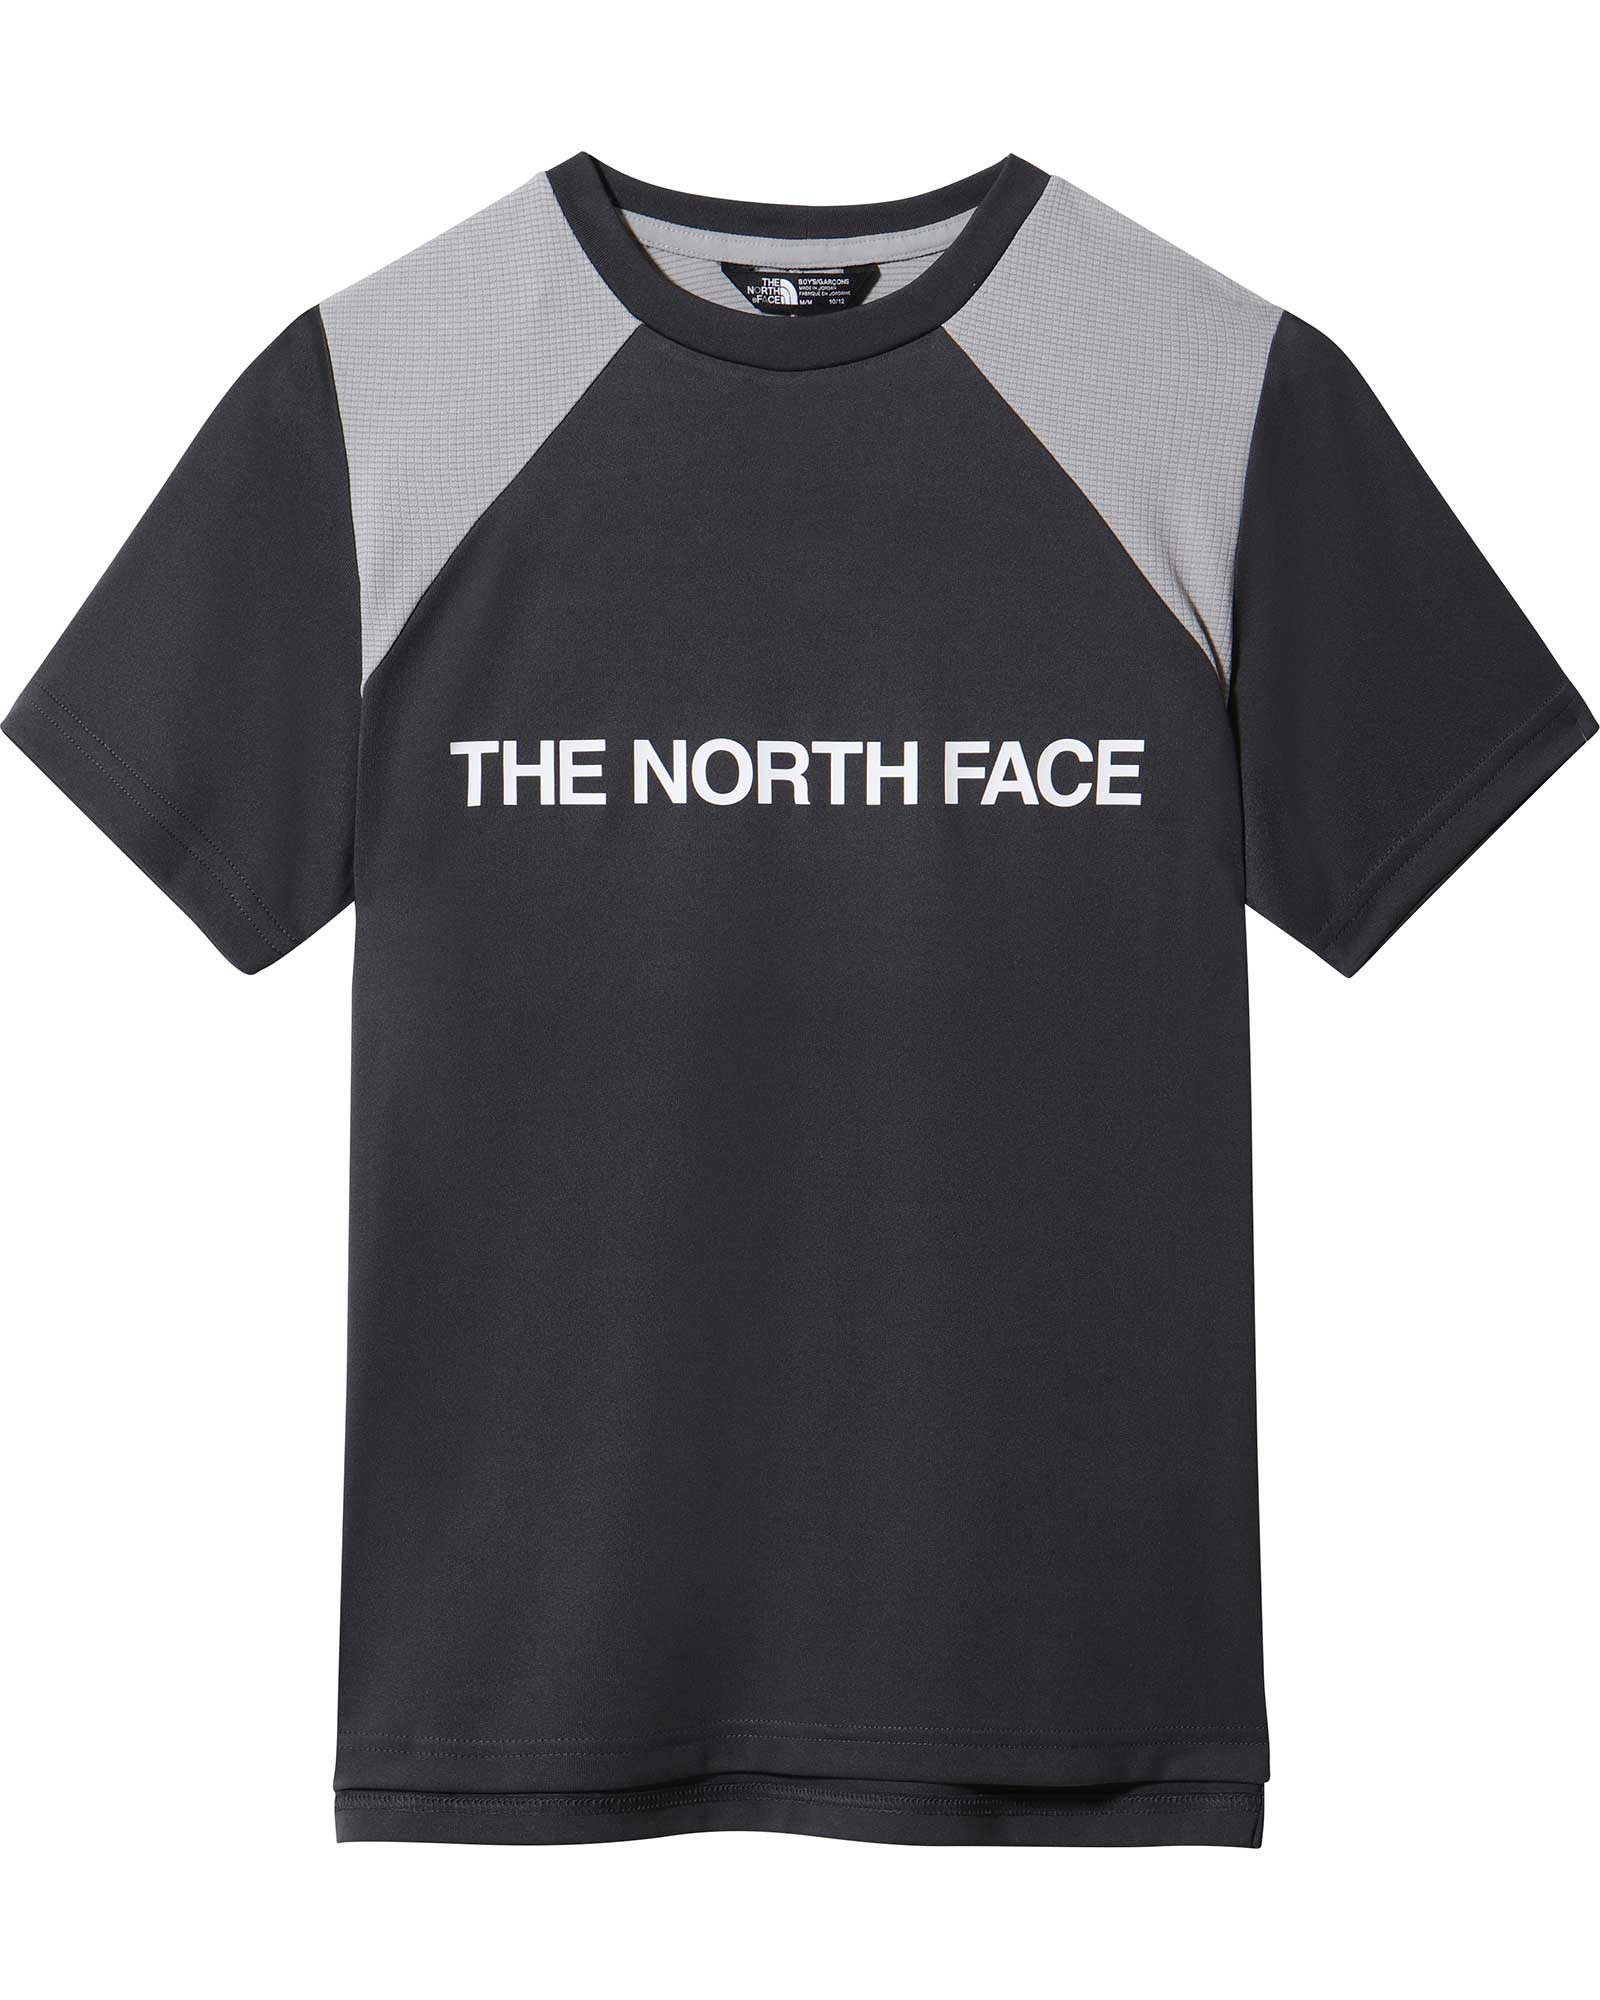 The North Face Never Stop Boys’ T Shirt - Asphalt Grey L